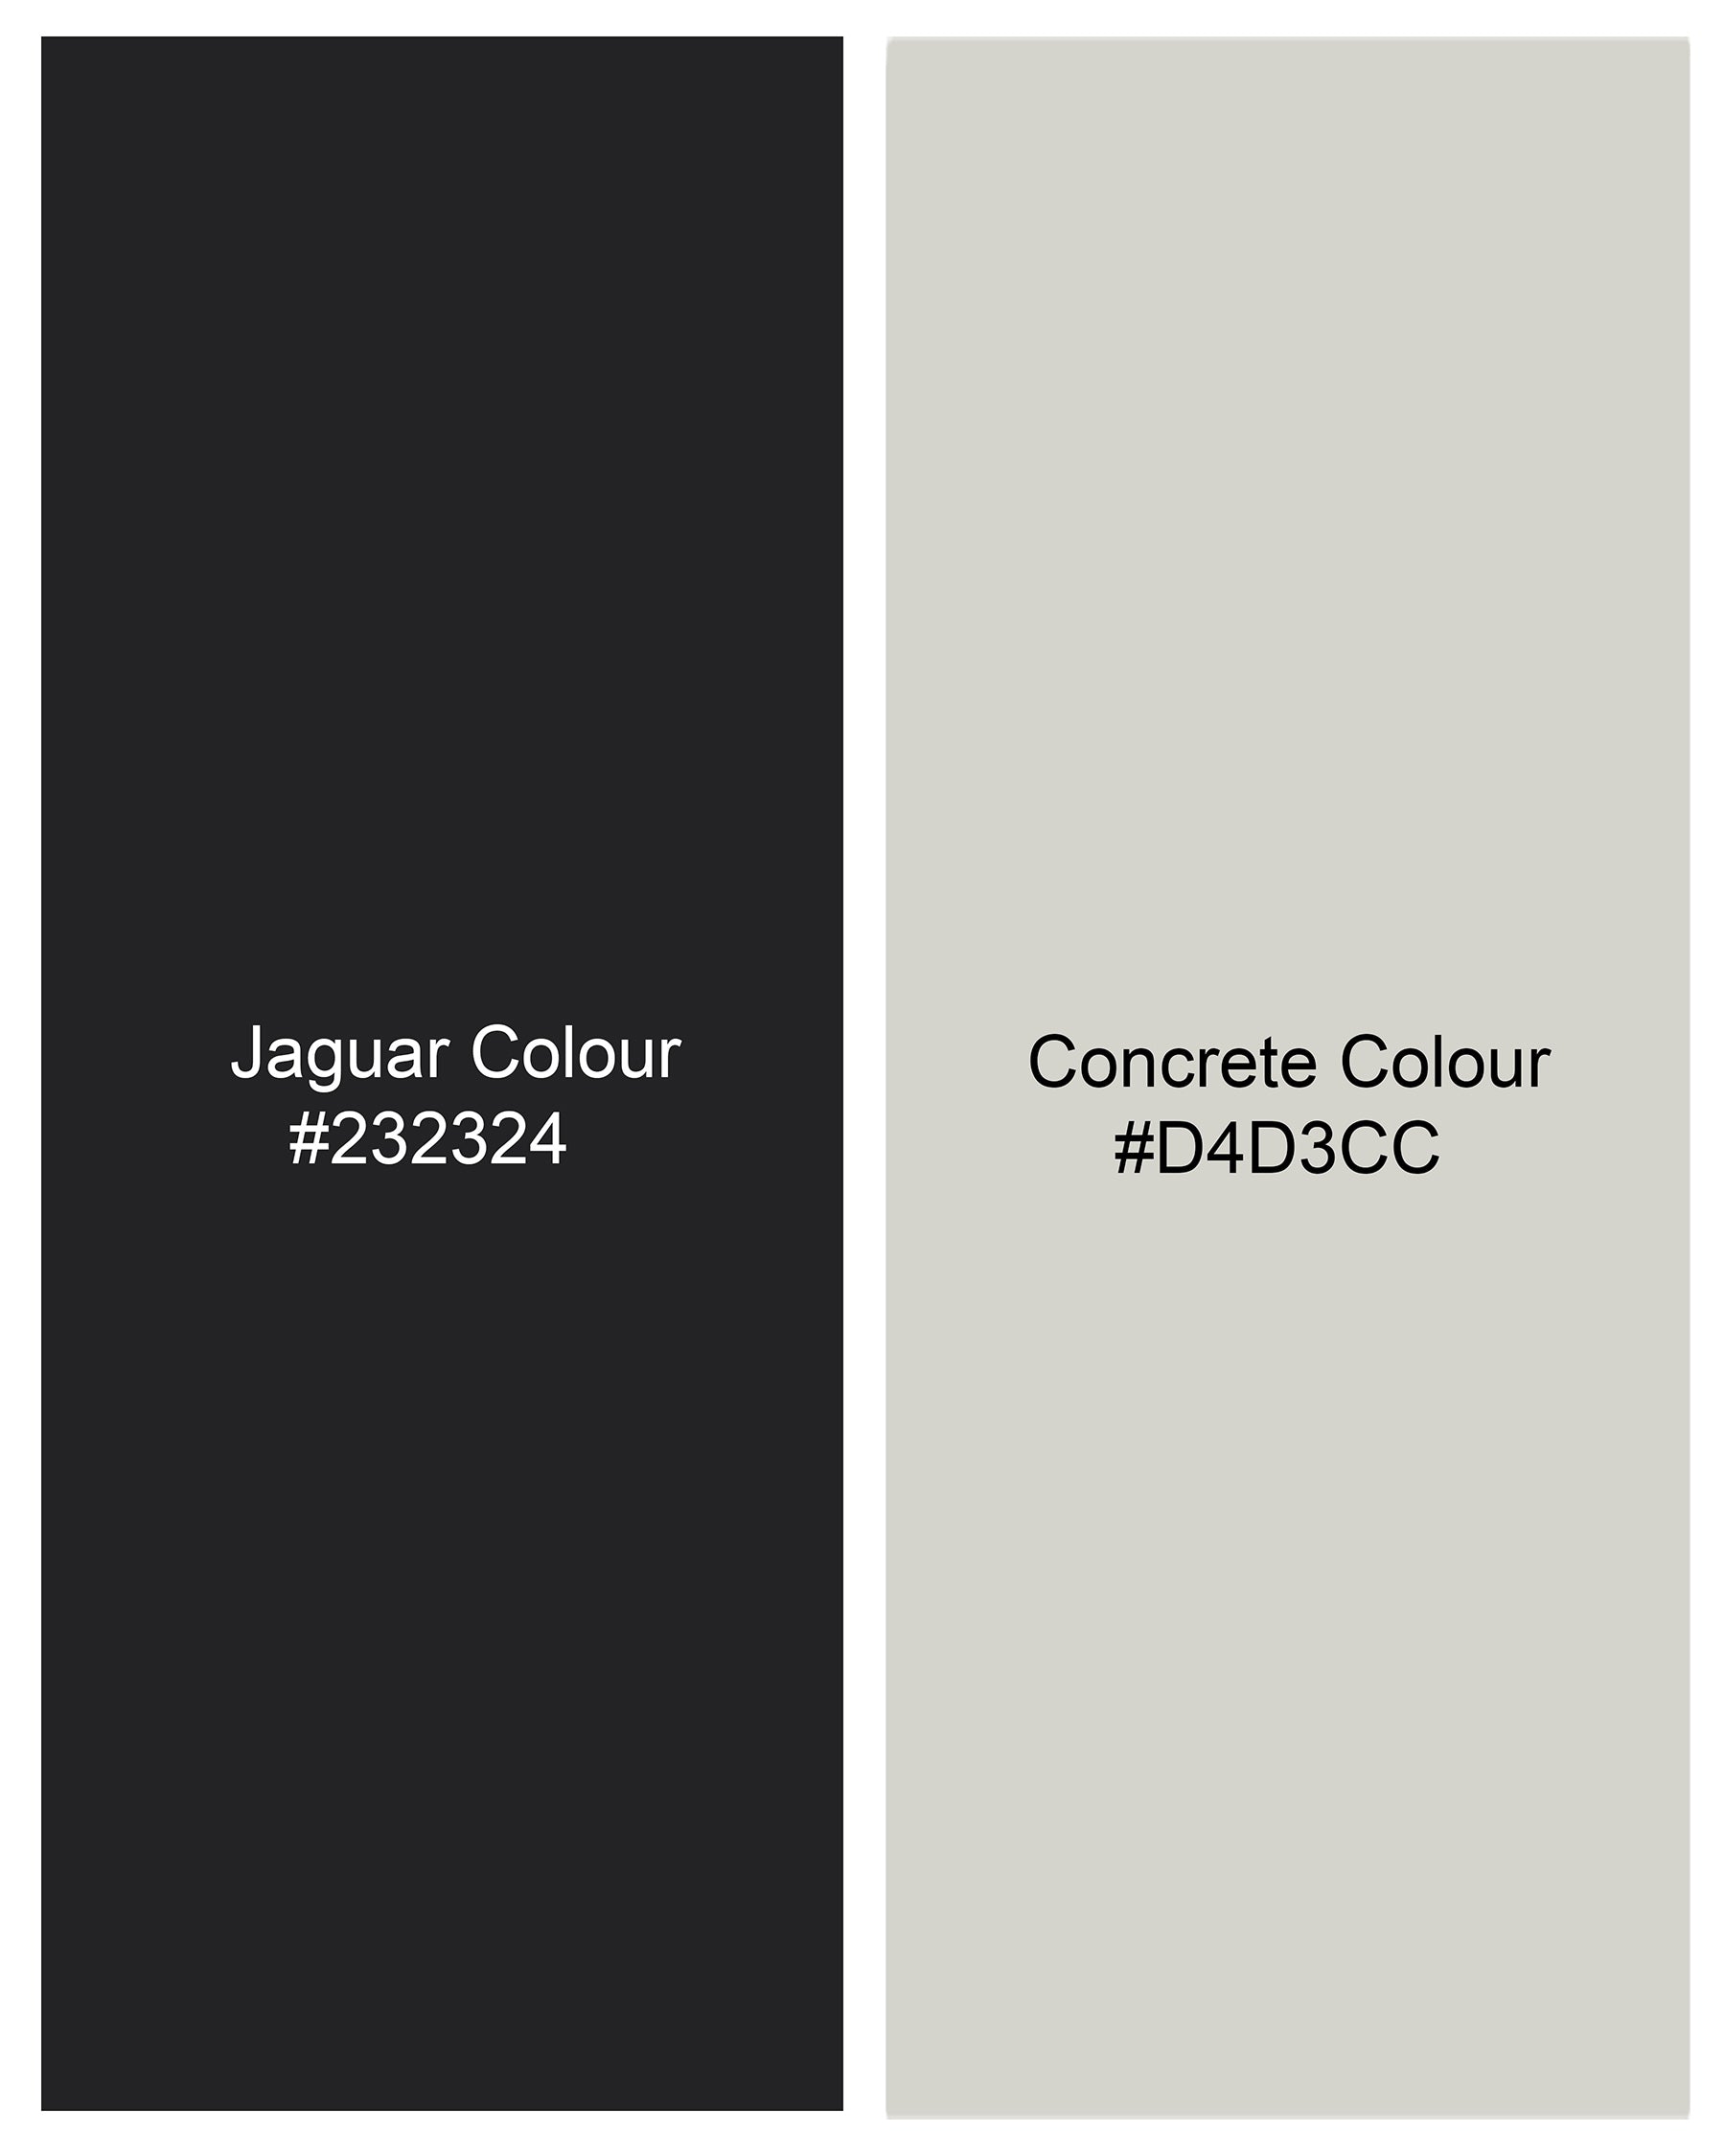 Jaguar Black with Concrete Gray Striped Double Breasted Belt Closure Trench Coat Belt Closure TCB2157-DB-D35-36, TCB2157-DB-D35-38, TCB2157-DB-D35-40, TCB2157-DB-D35-42, TCB2157-DB-D35-44, TCB2157-DB-D35-46, TCB2157-DB-D35-48, TCB2157-DB-D35-50, TCB2157-DB-D35-52, TCB2157-DB-D35-54, TCB2157-DB-D35-56, TCB2157-DB-D35-58, TCB2157-DB-D35-60